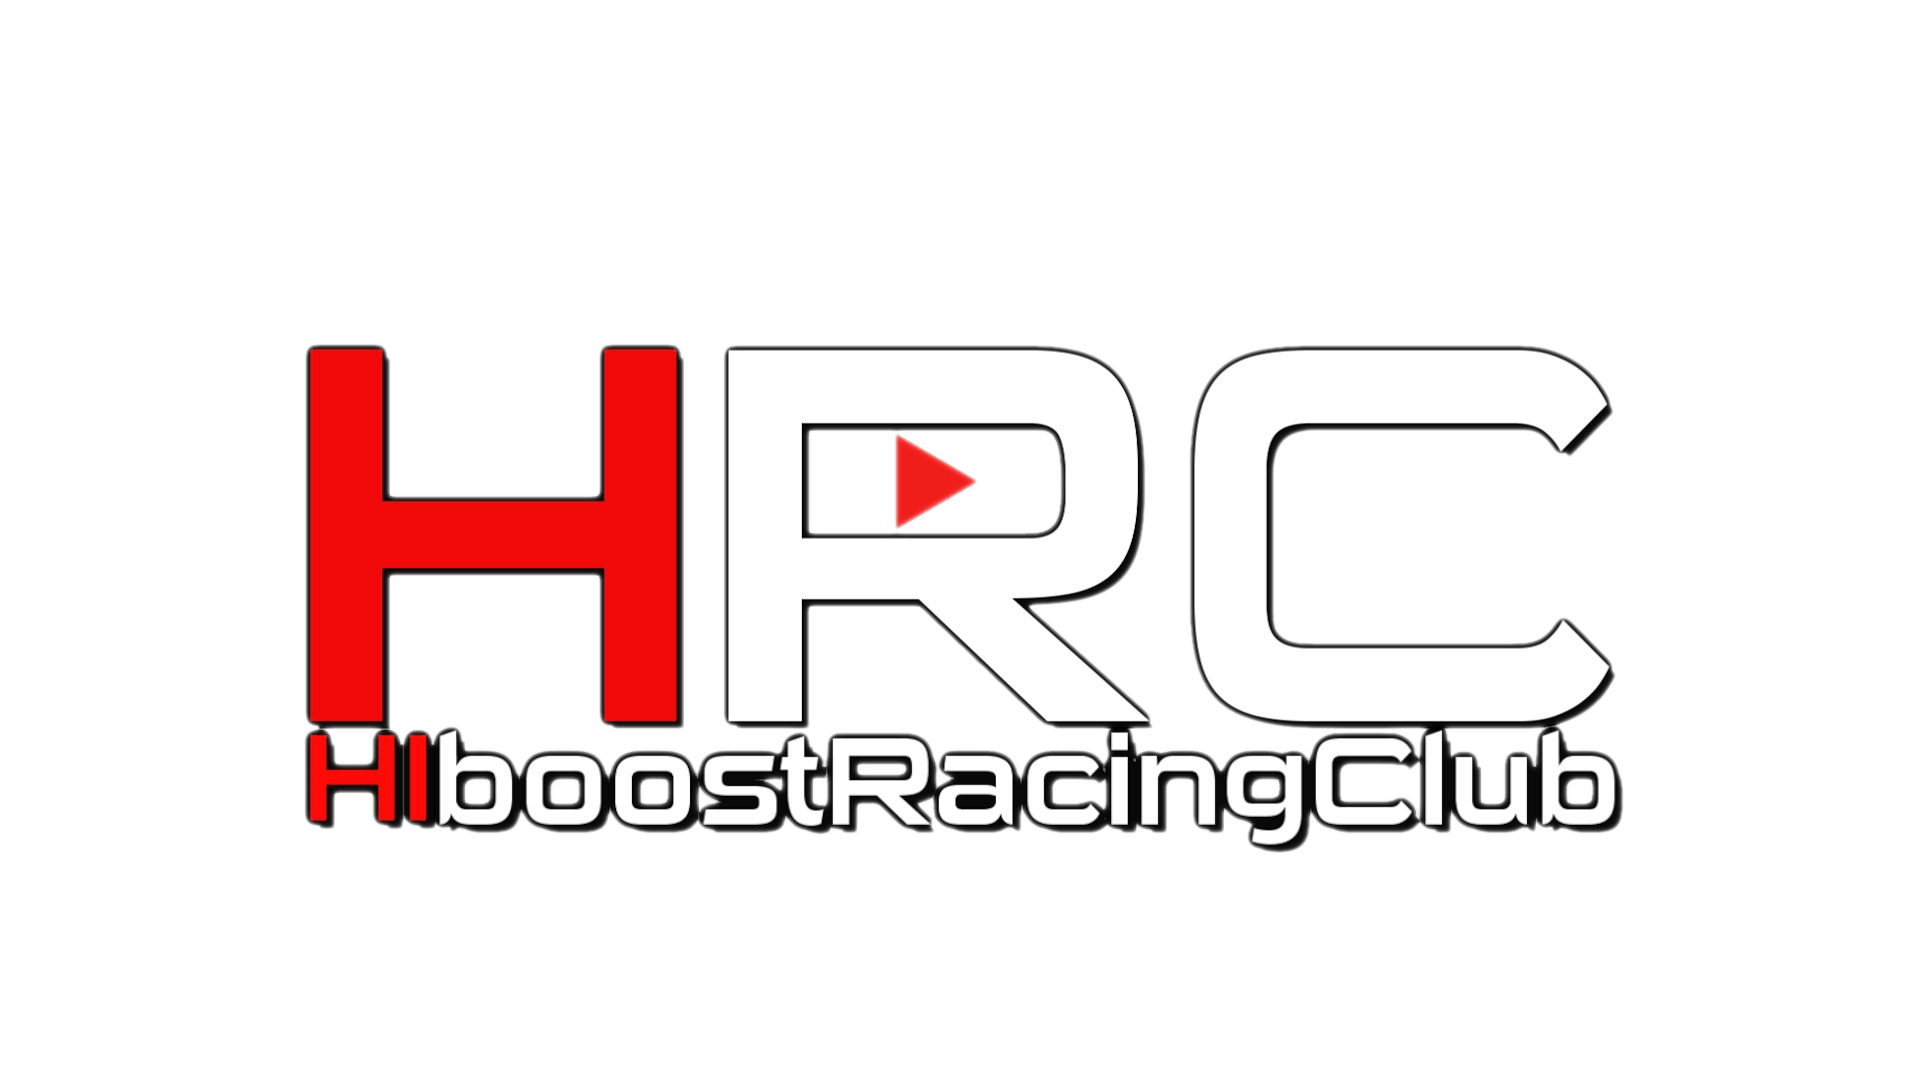 Teespring Logo - HIboost Racing Club Merch